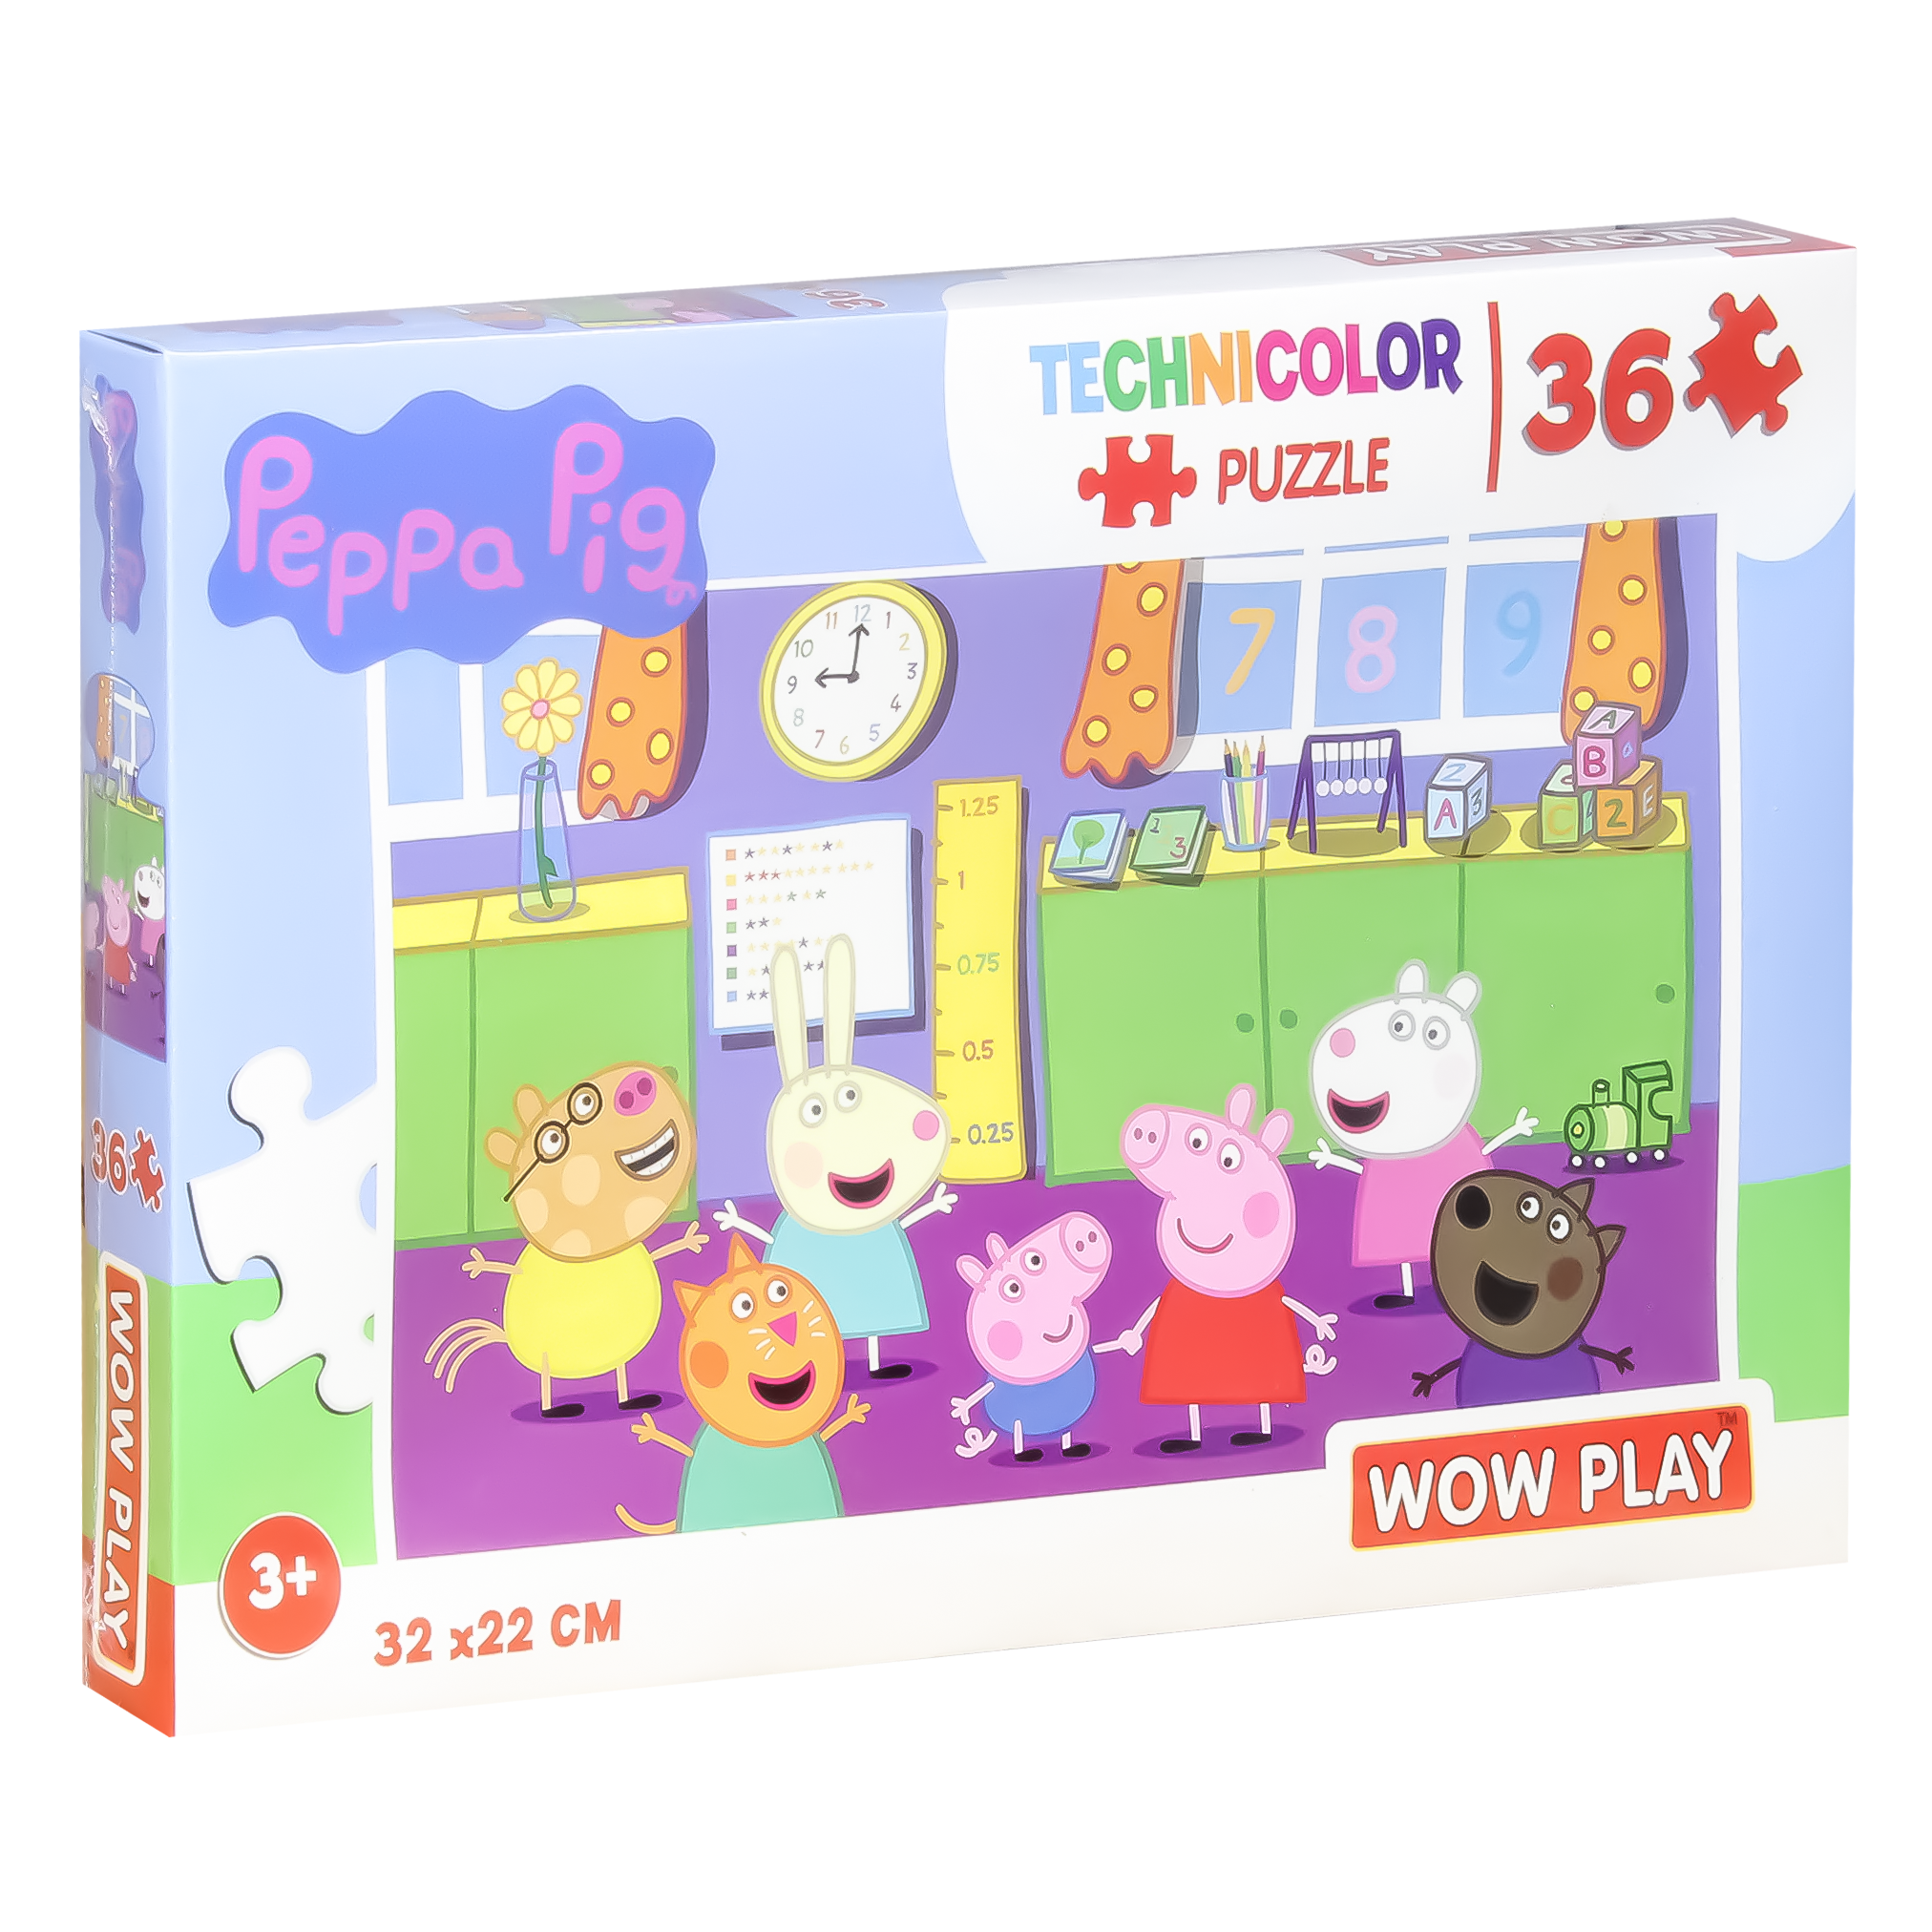 Wow Play Technicolour Puzzle 36 pieces 